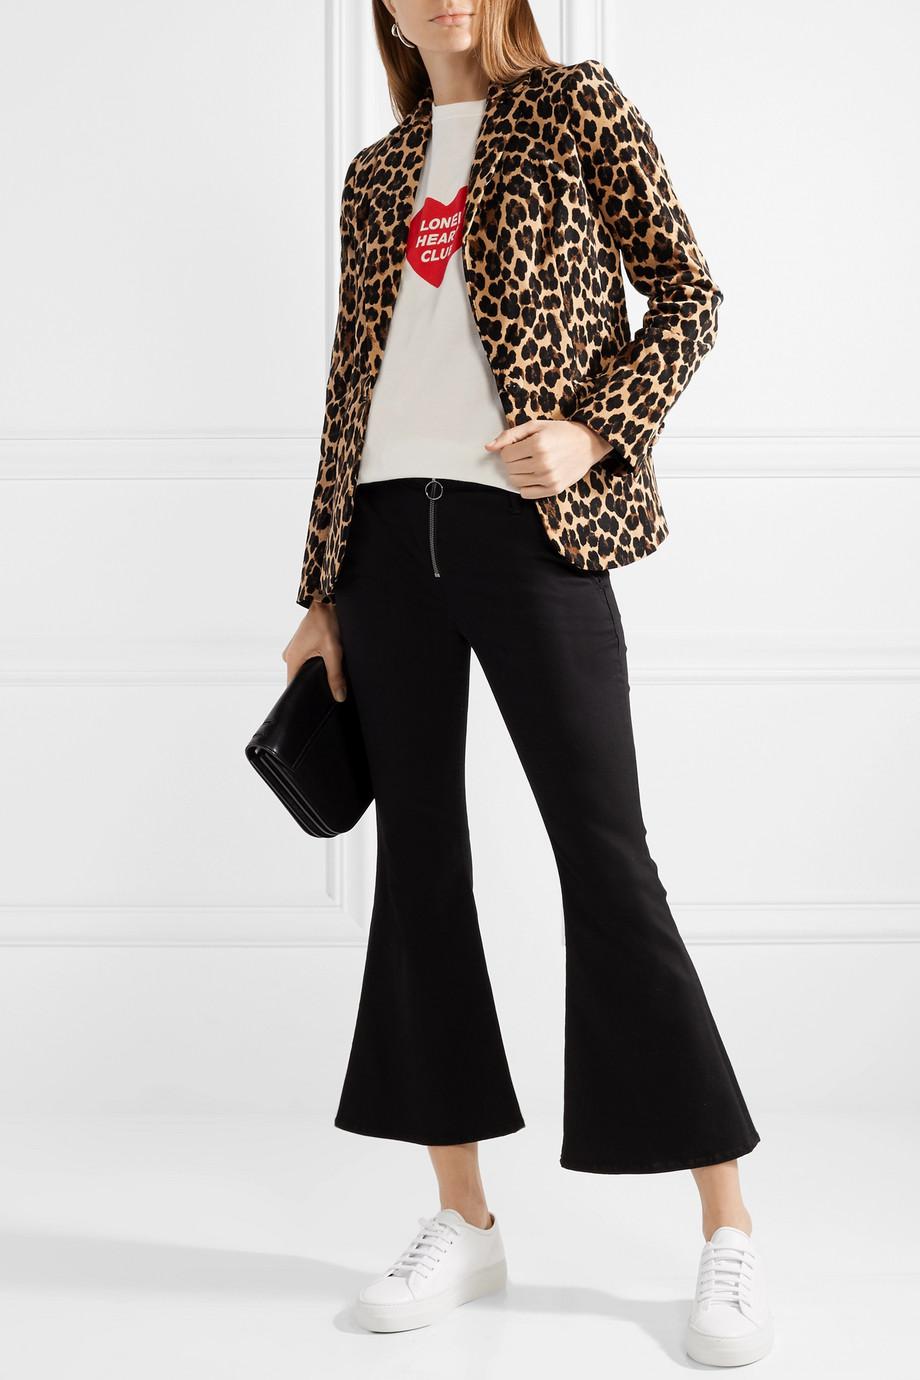 Lyst - Frame Leopard-print Cotton-blend Velvet Blazer in Brown